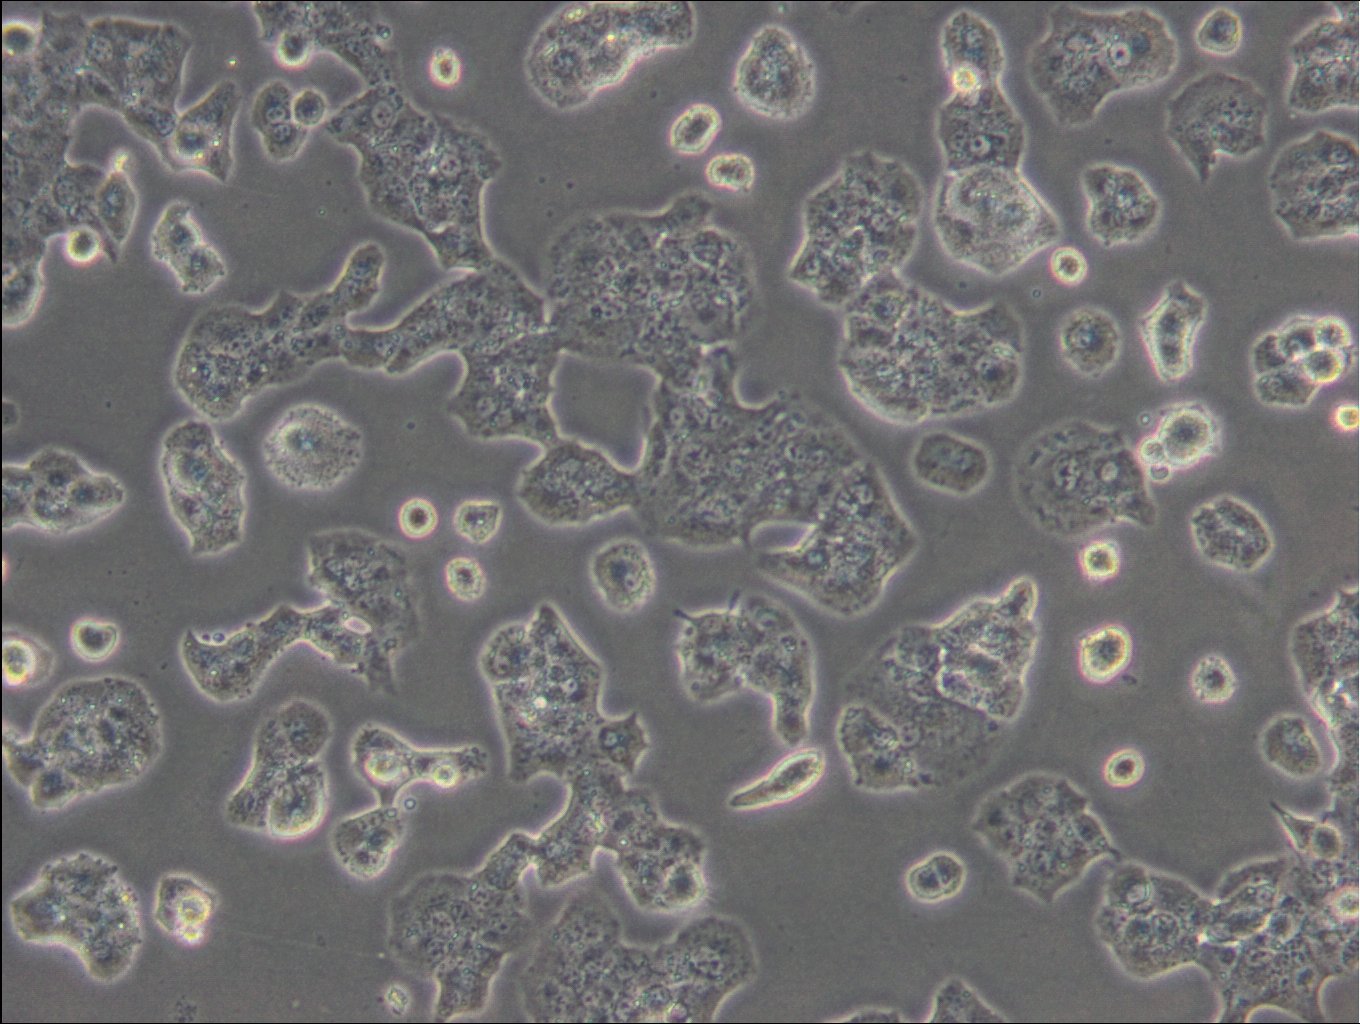 Beta-TC-6 Cells